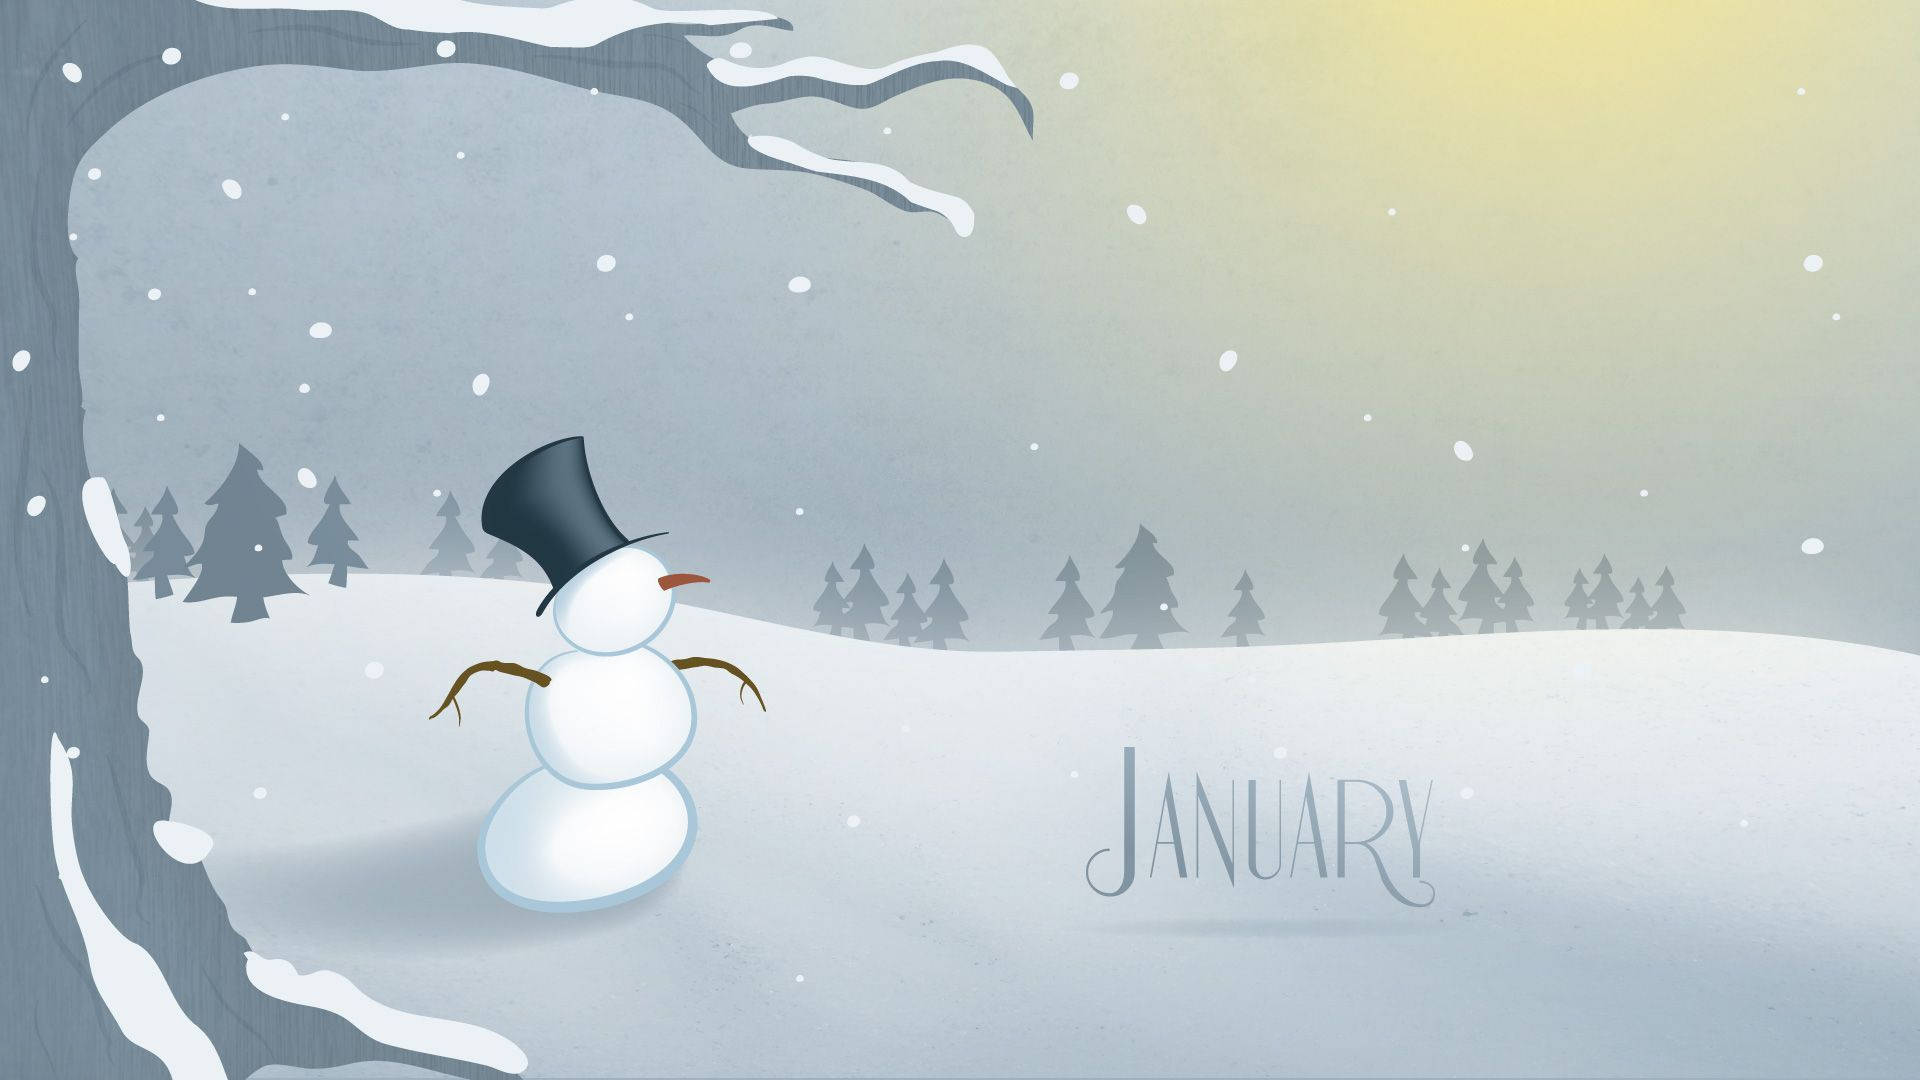 Download Cartoon Snowman January Winter Landscape Wallpaper 